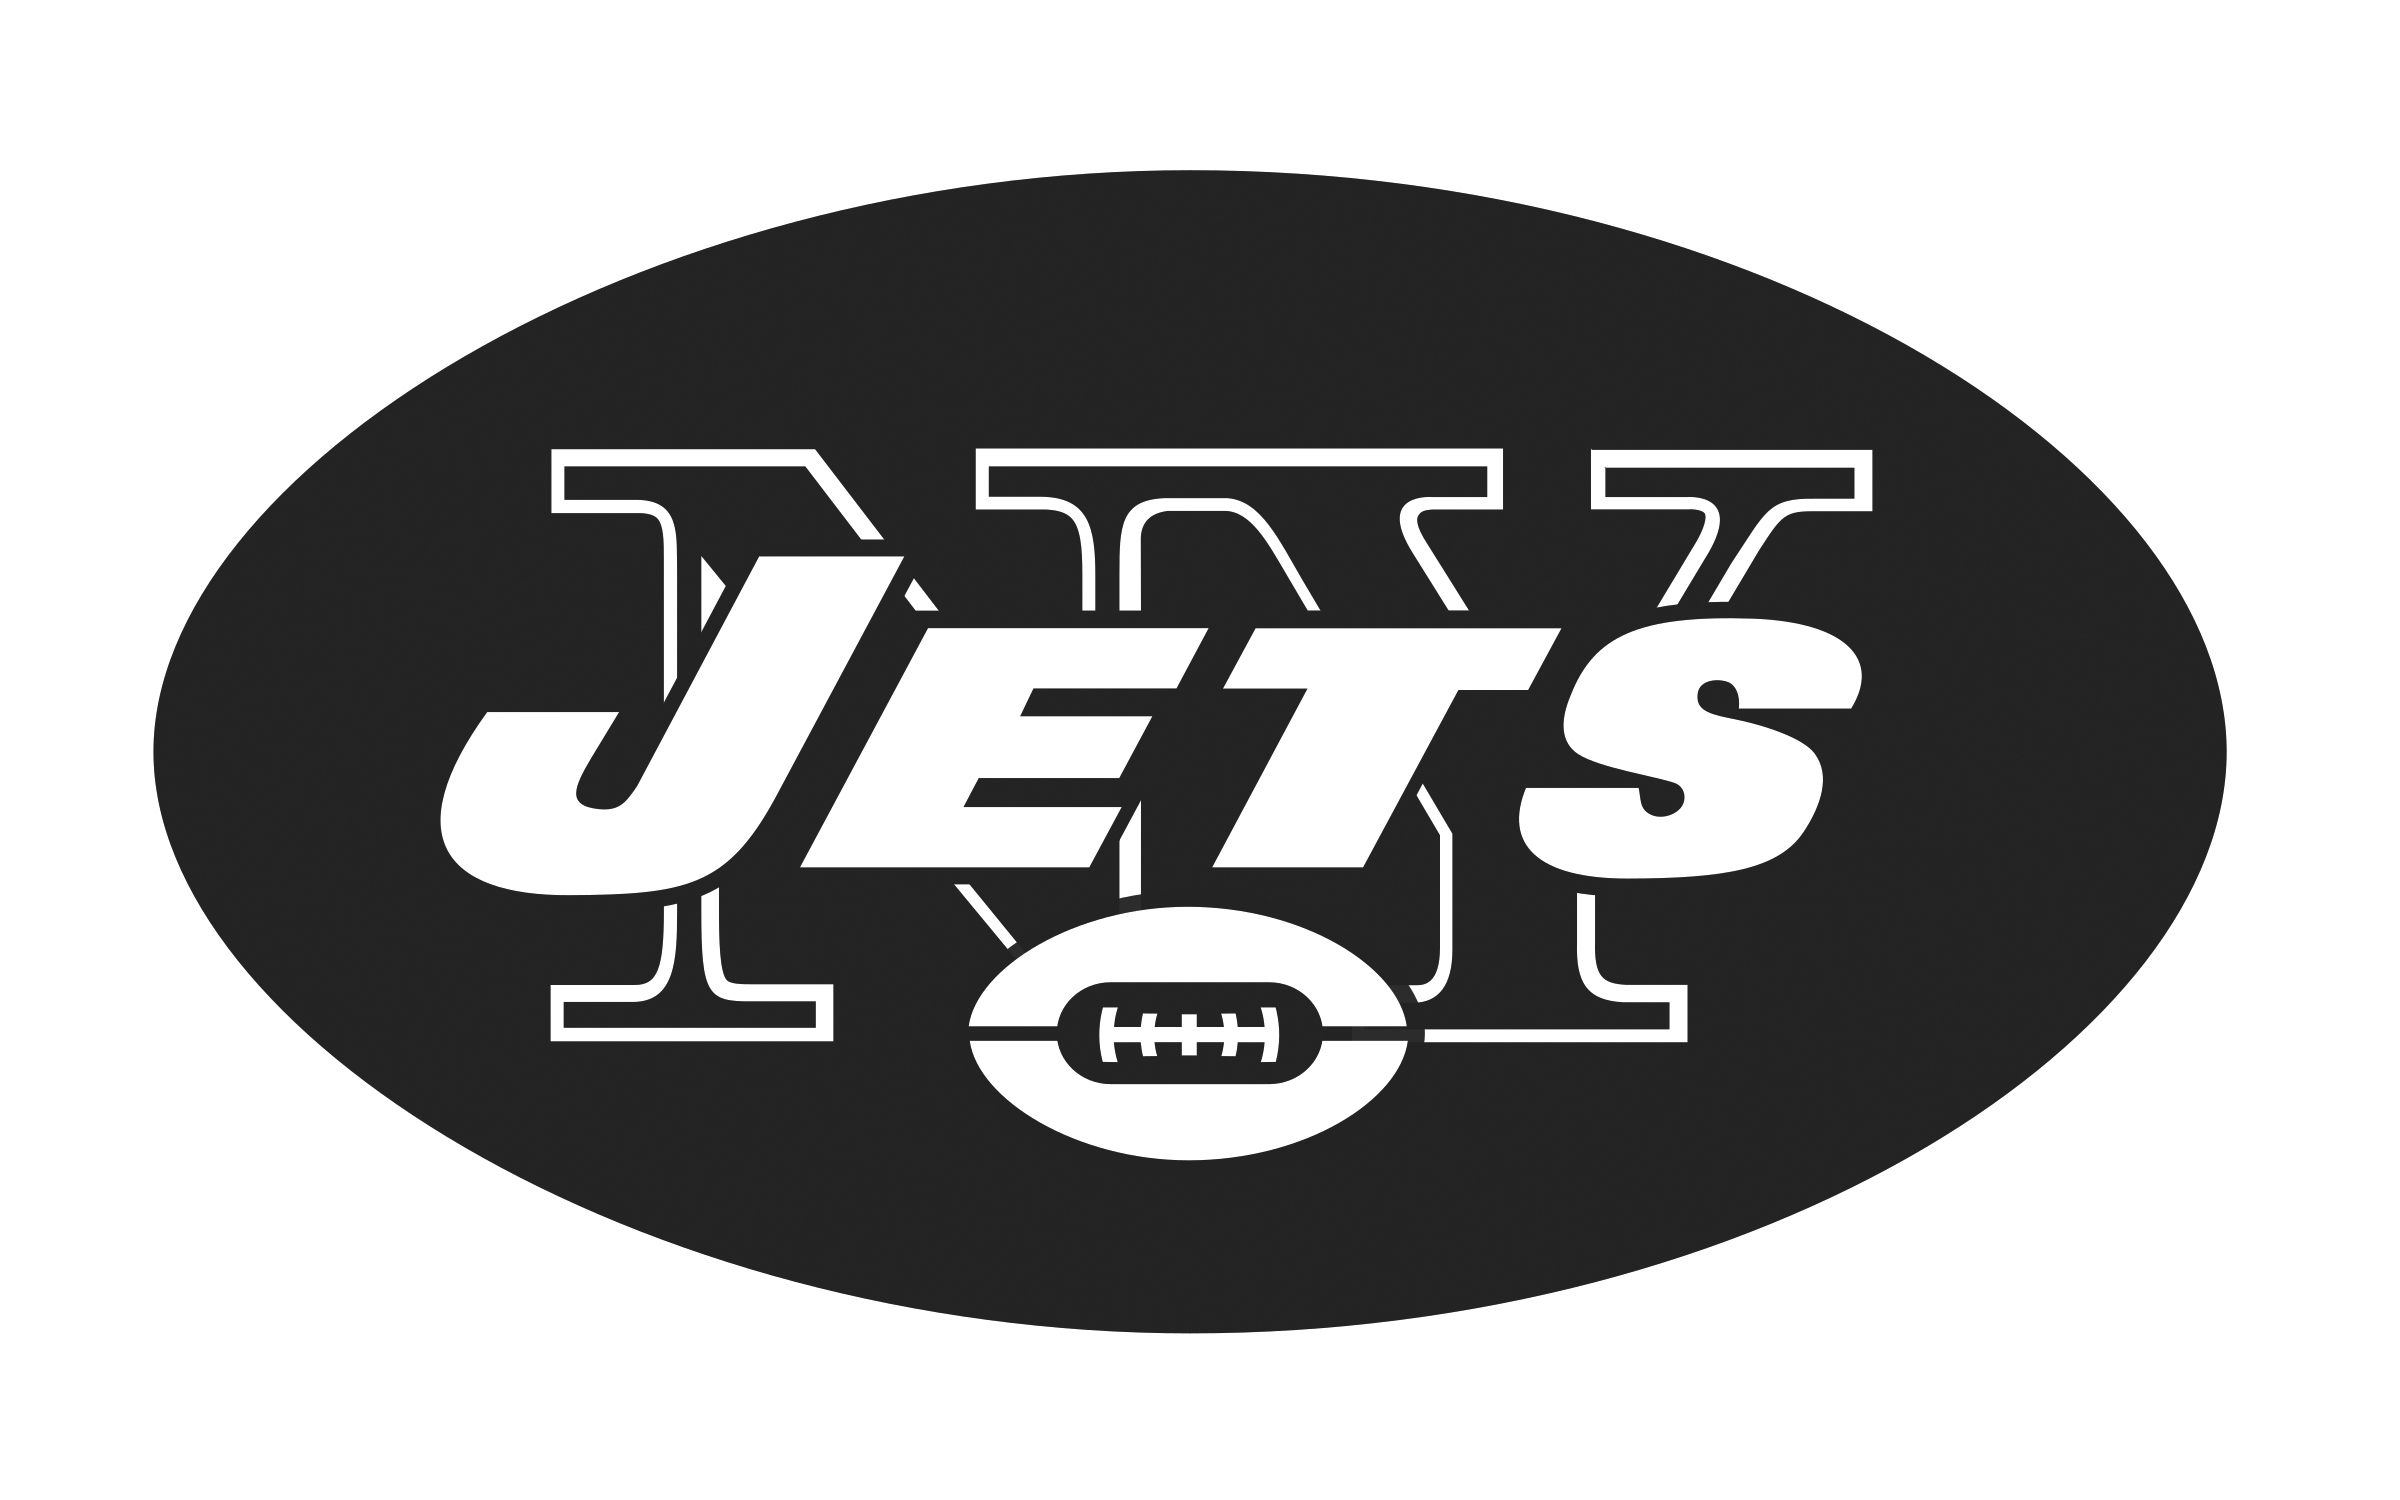 New York Jets end user logo